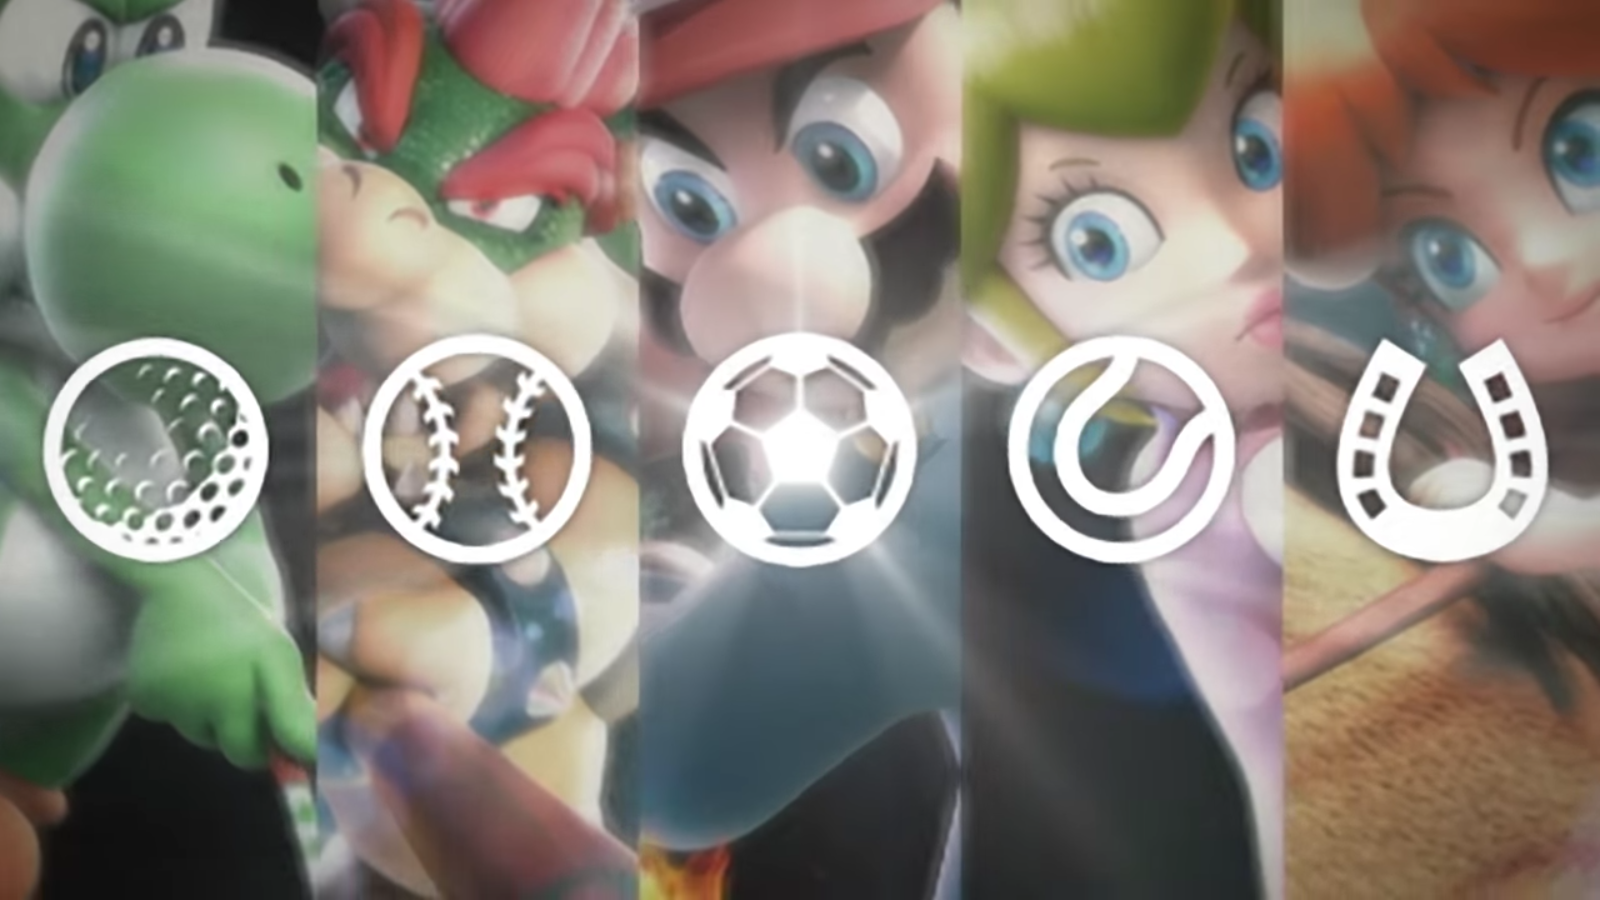 Nintendo Mario Sports Superstars Amiibo Card Golf Peach for Nintendo  Switch, Wii U, and 3DS